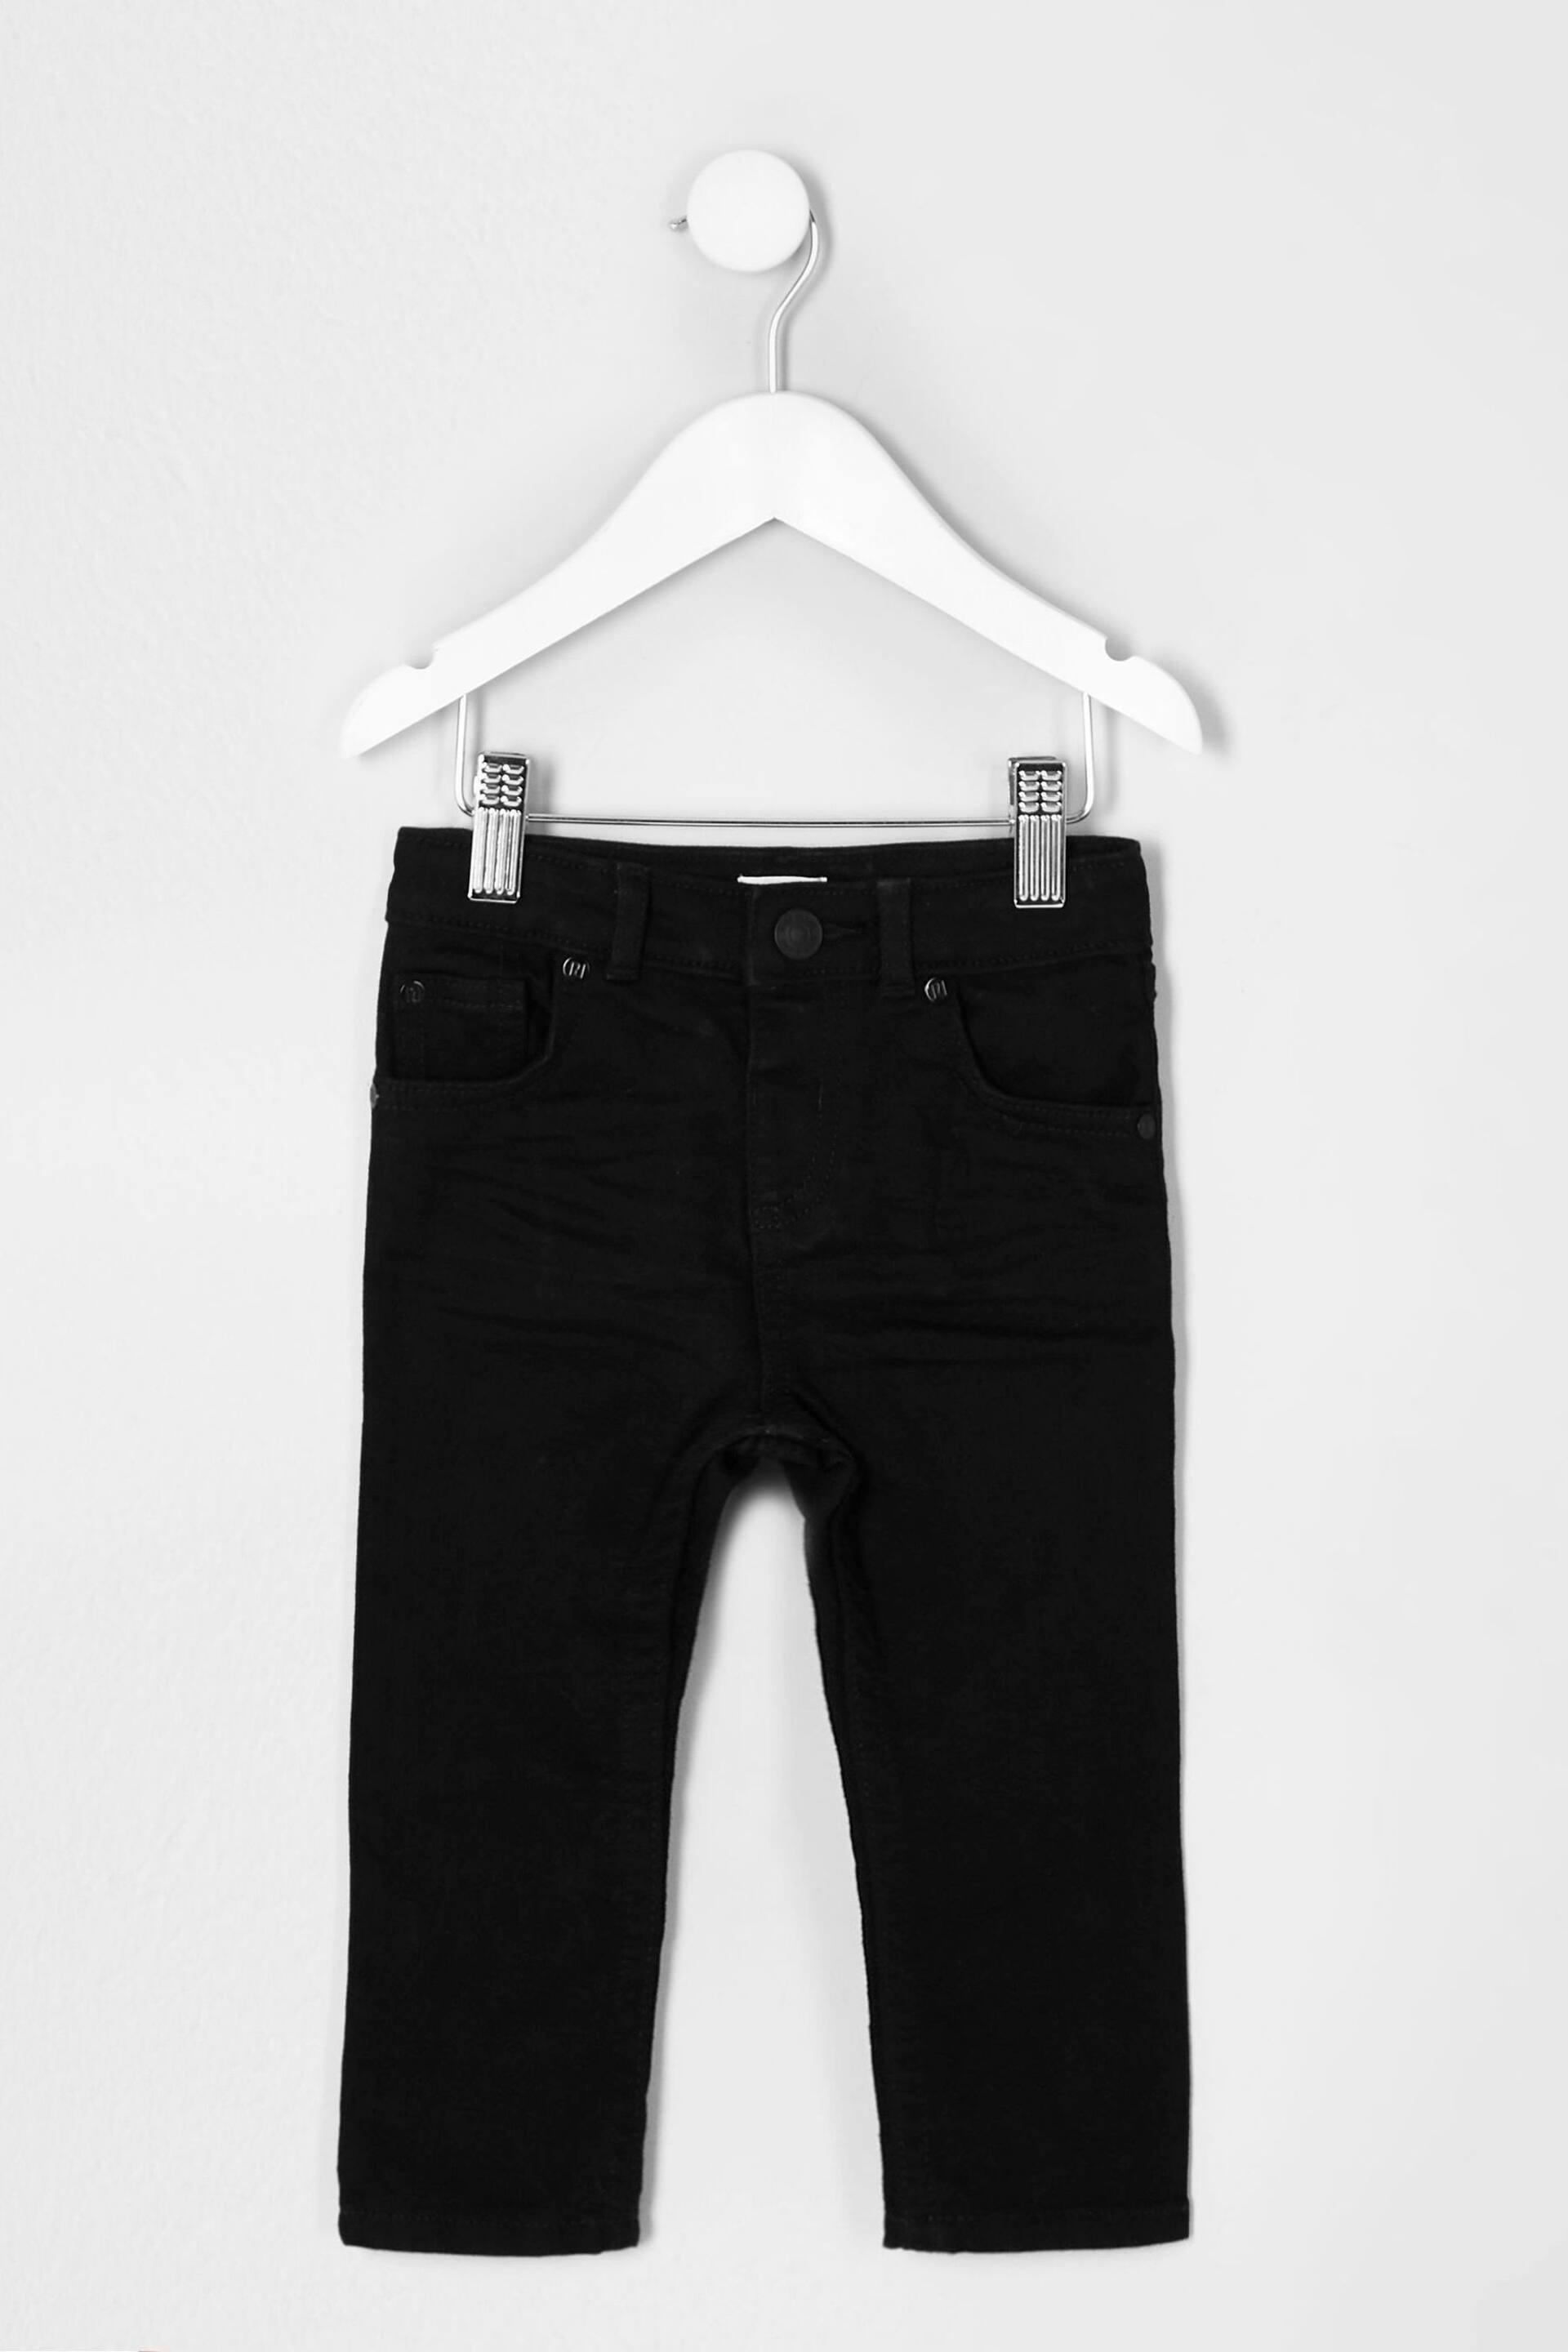 River Island Black Chrome Boys Skinny Jeans - Image 1 of 3